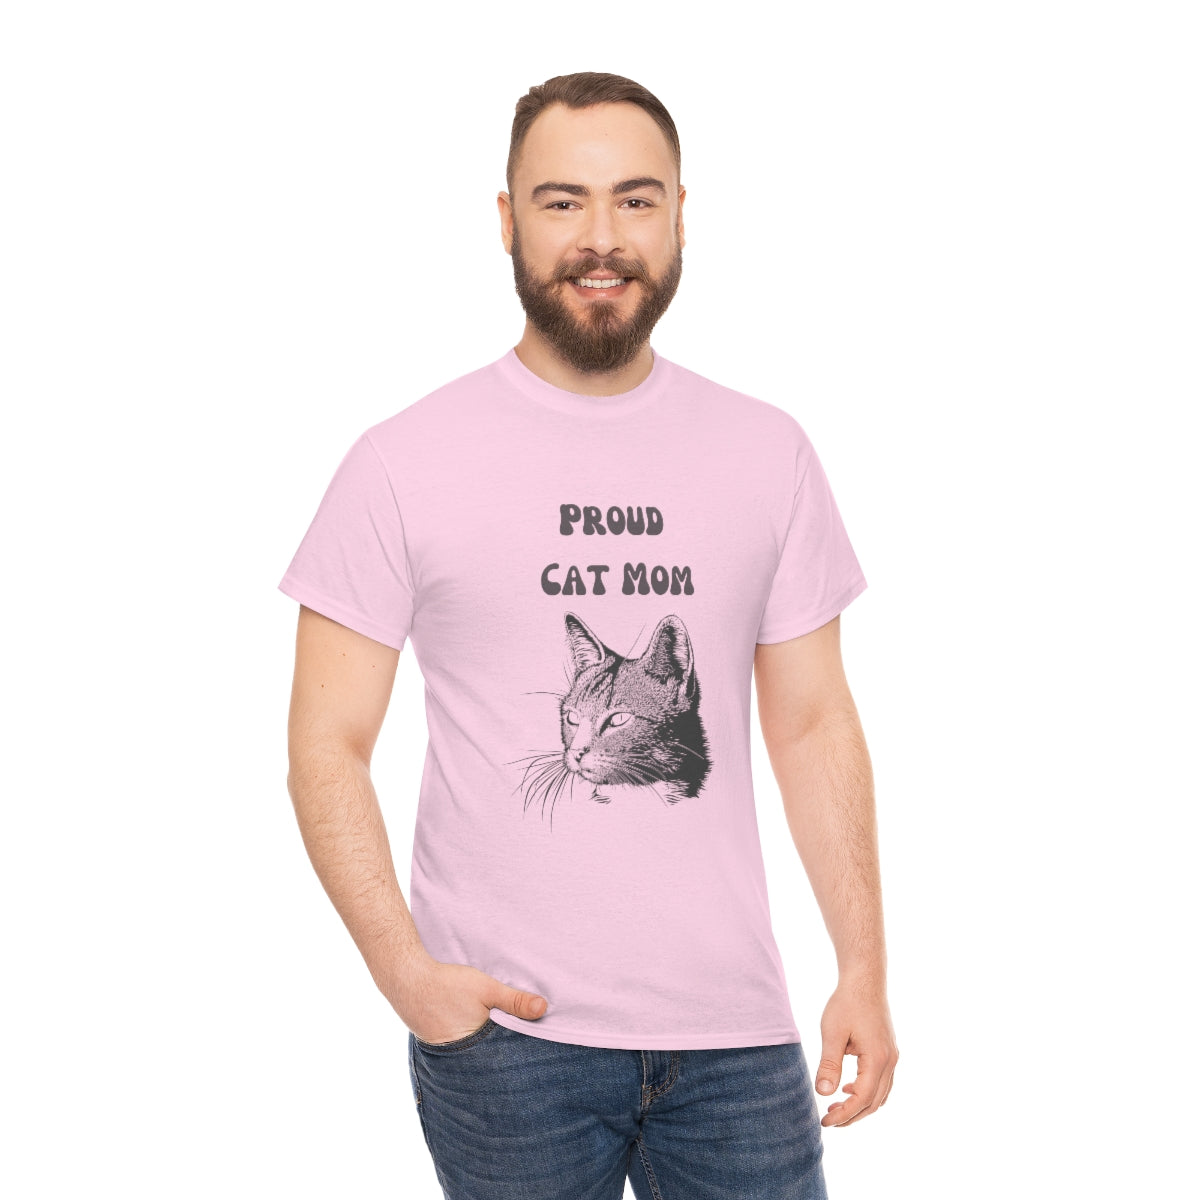 Proud Cat Mom Shirt, Cat Mom,  Funny Tshirt, Cat Owner Shirt, Cat Lover Tshirt, Cat People Tee, Gift for Cat Mom, Fur Mom Shirt, Fur Mom, - The Good Life Vibe